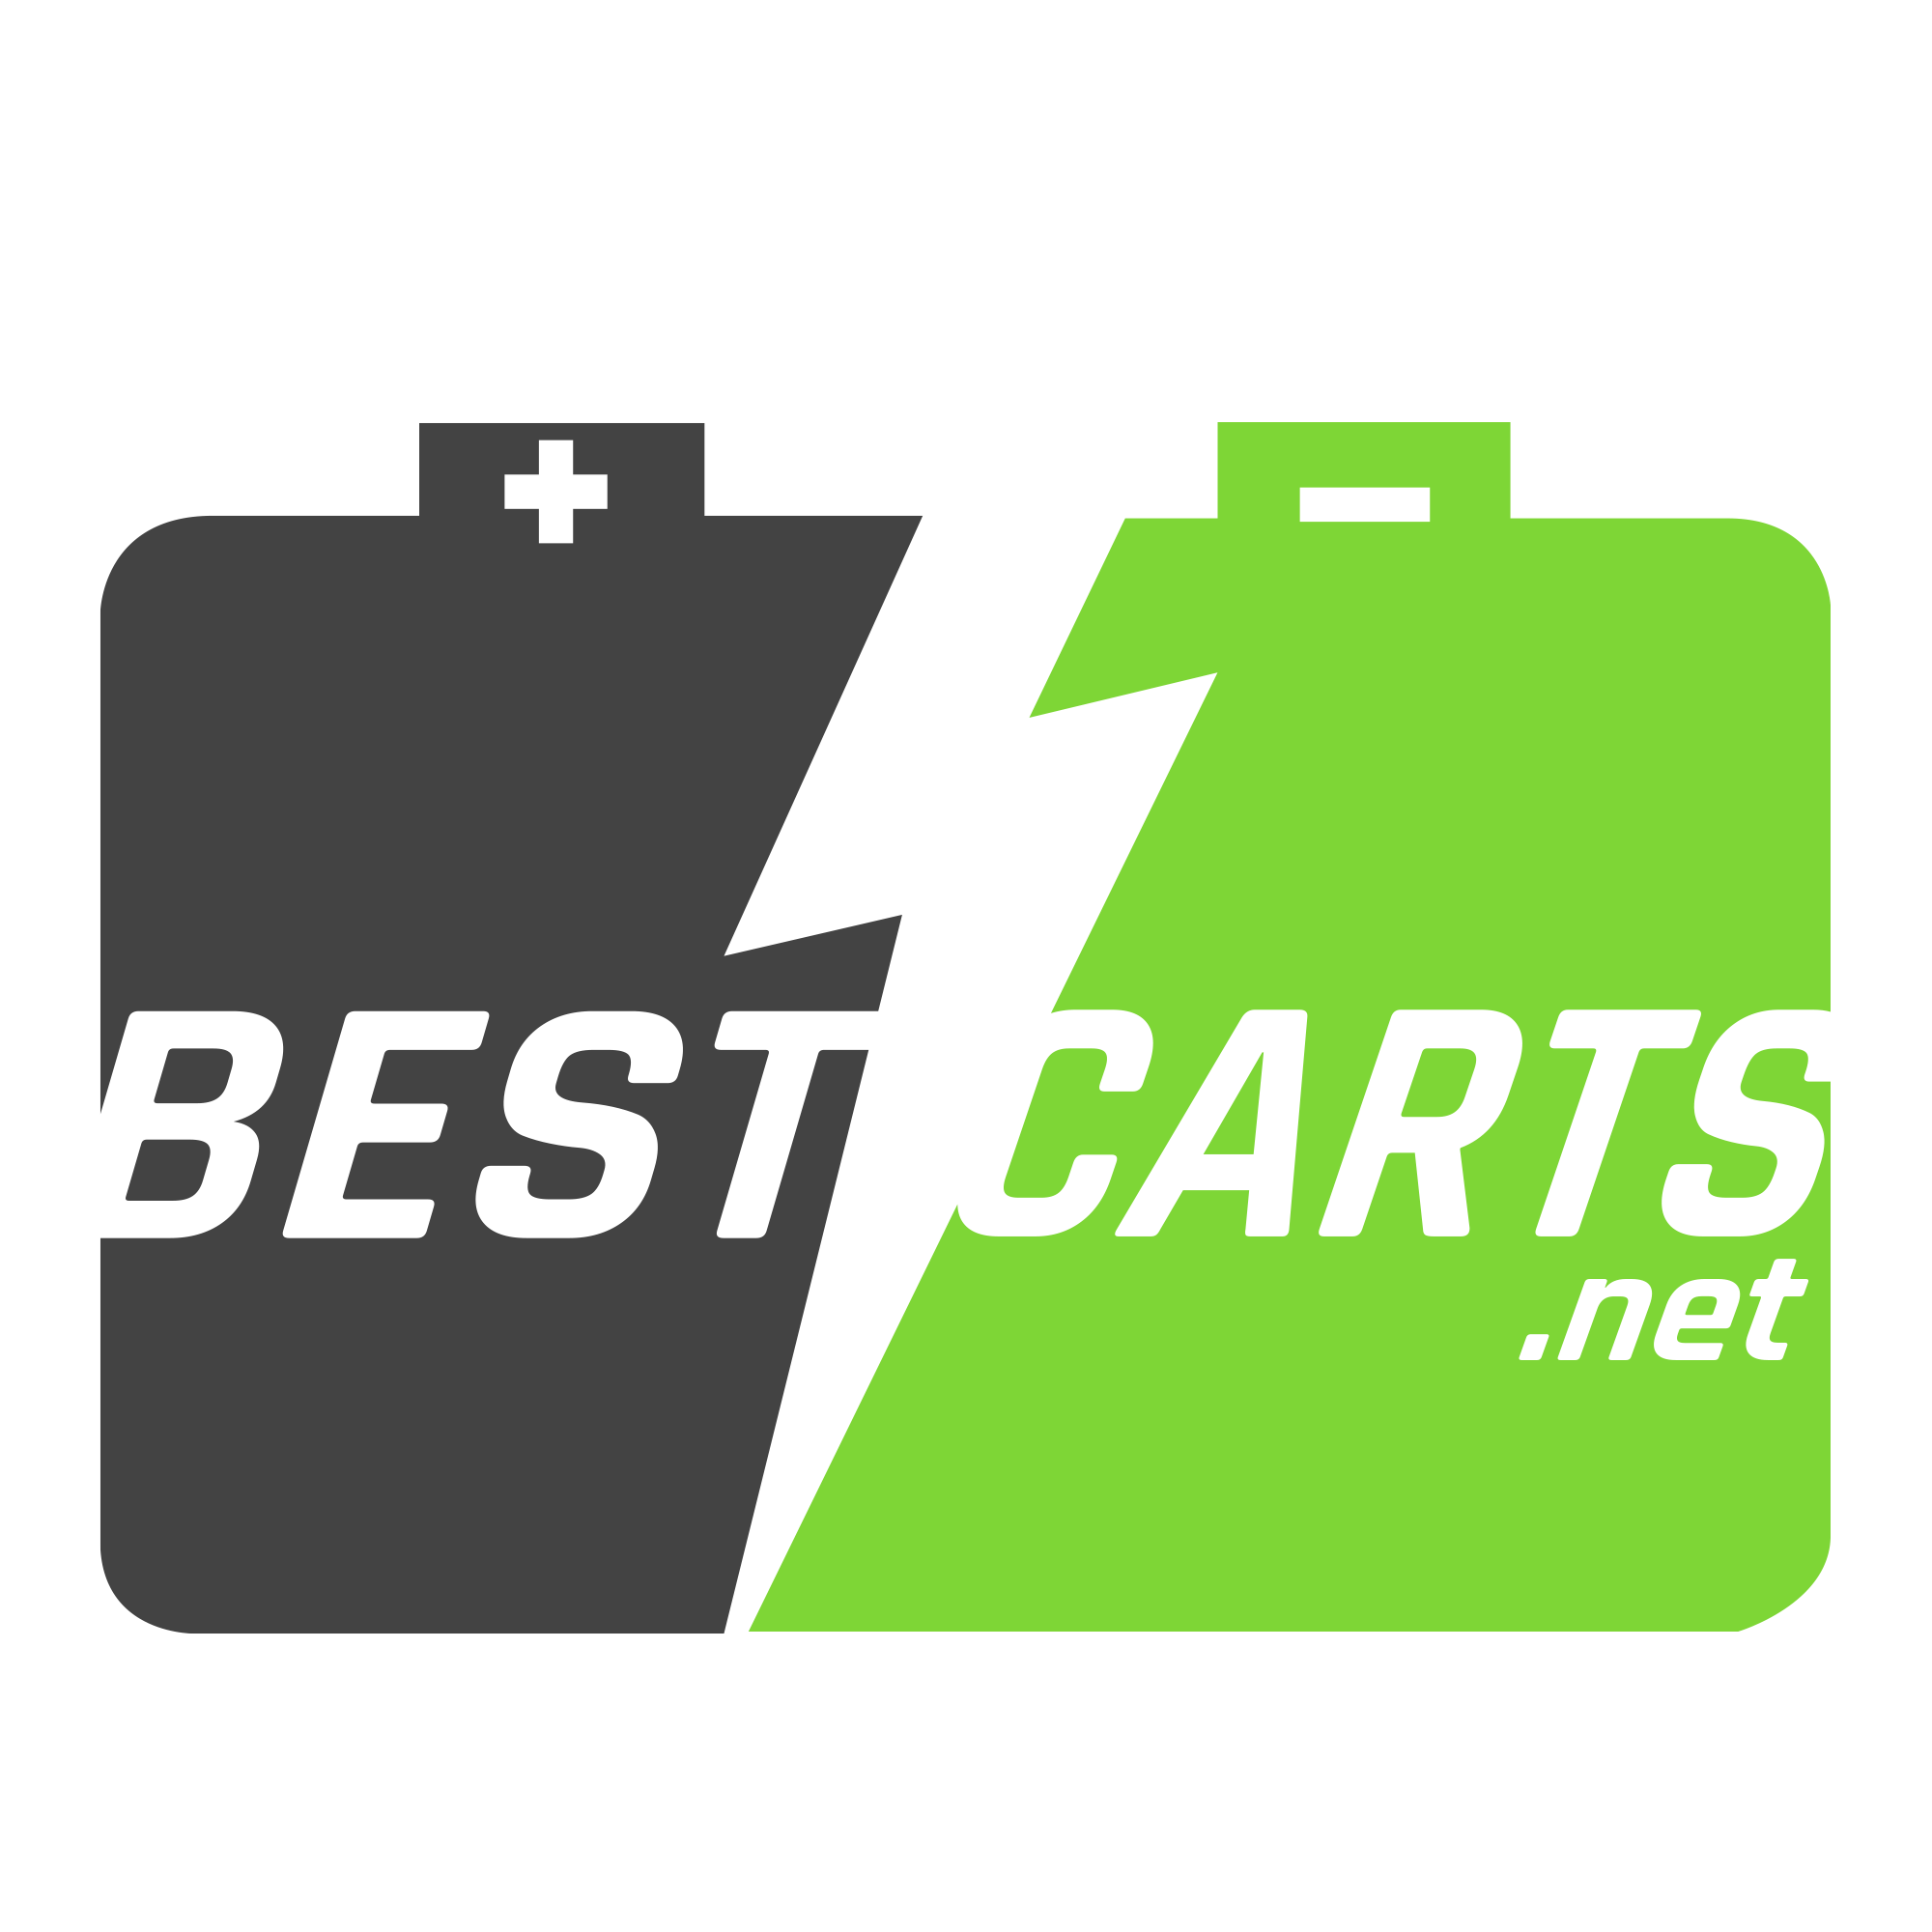 bestcarts.net